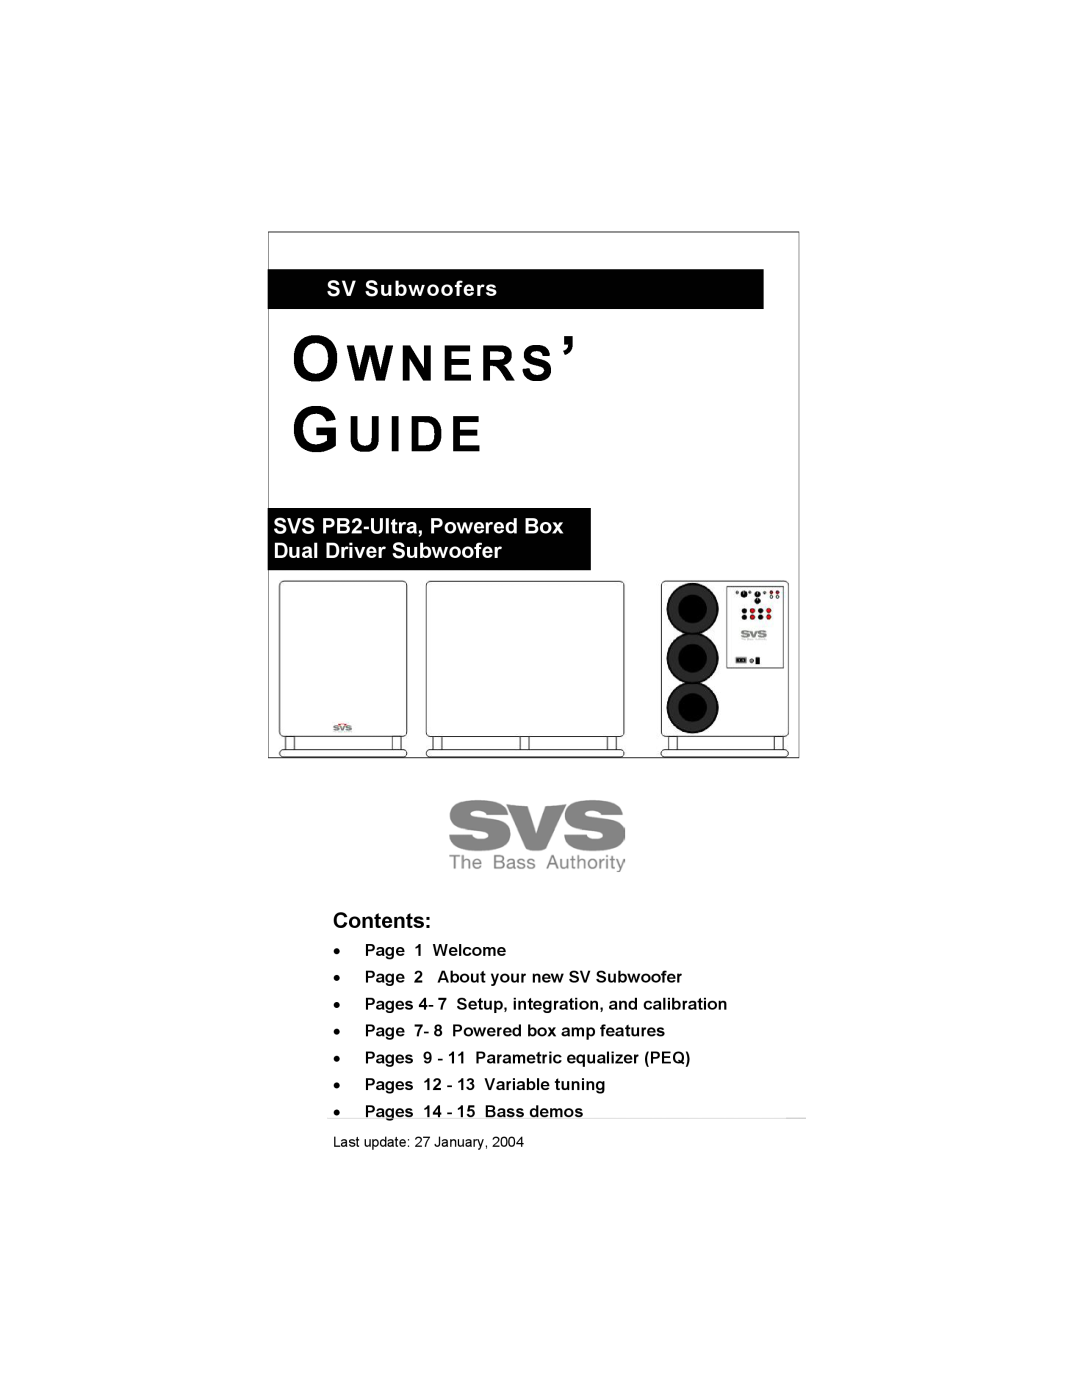 SV Sound SVS PB2-Ultra manual Contents, O W N E R S ’ G U I D E, SV Subwoofers, Last update 27 January 